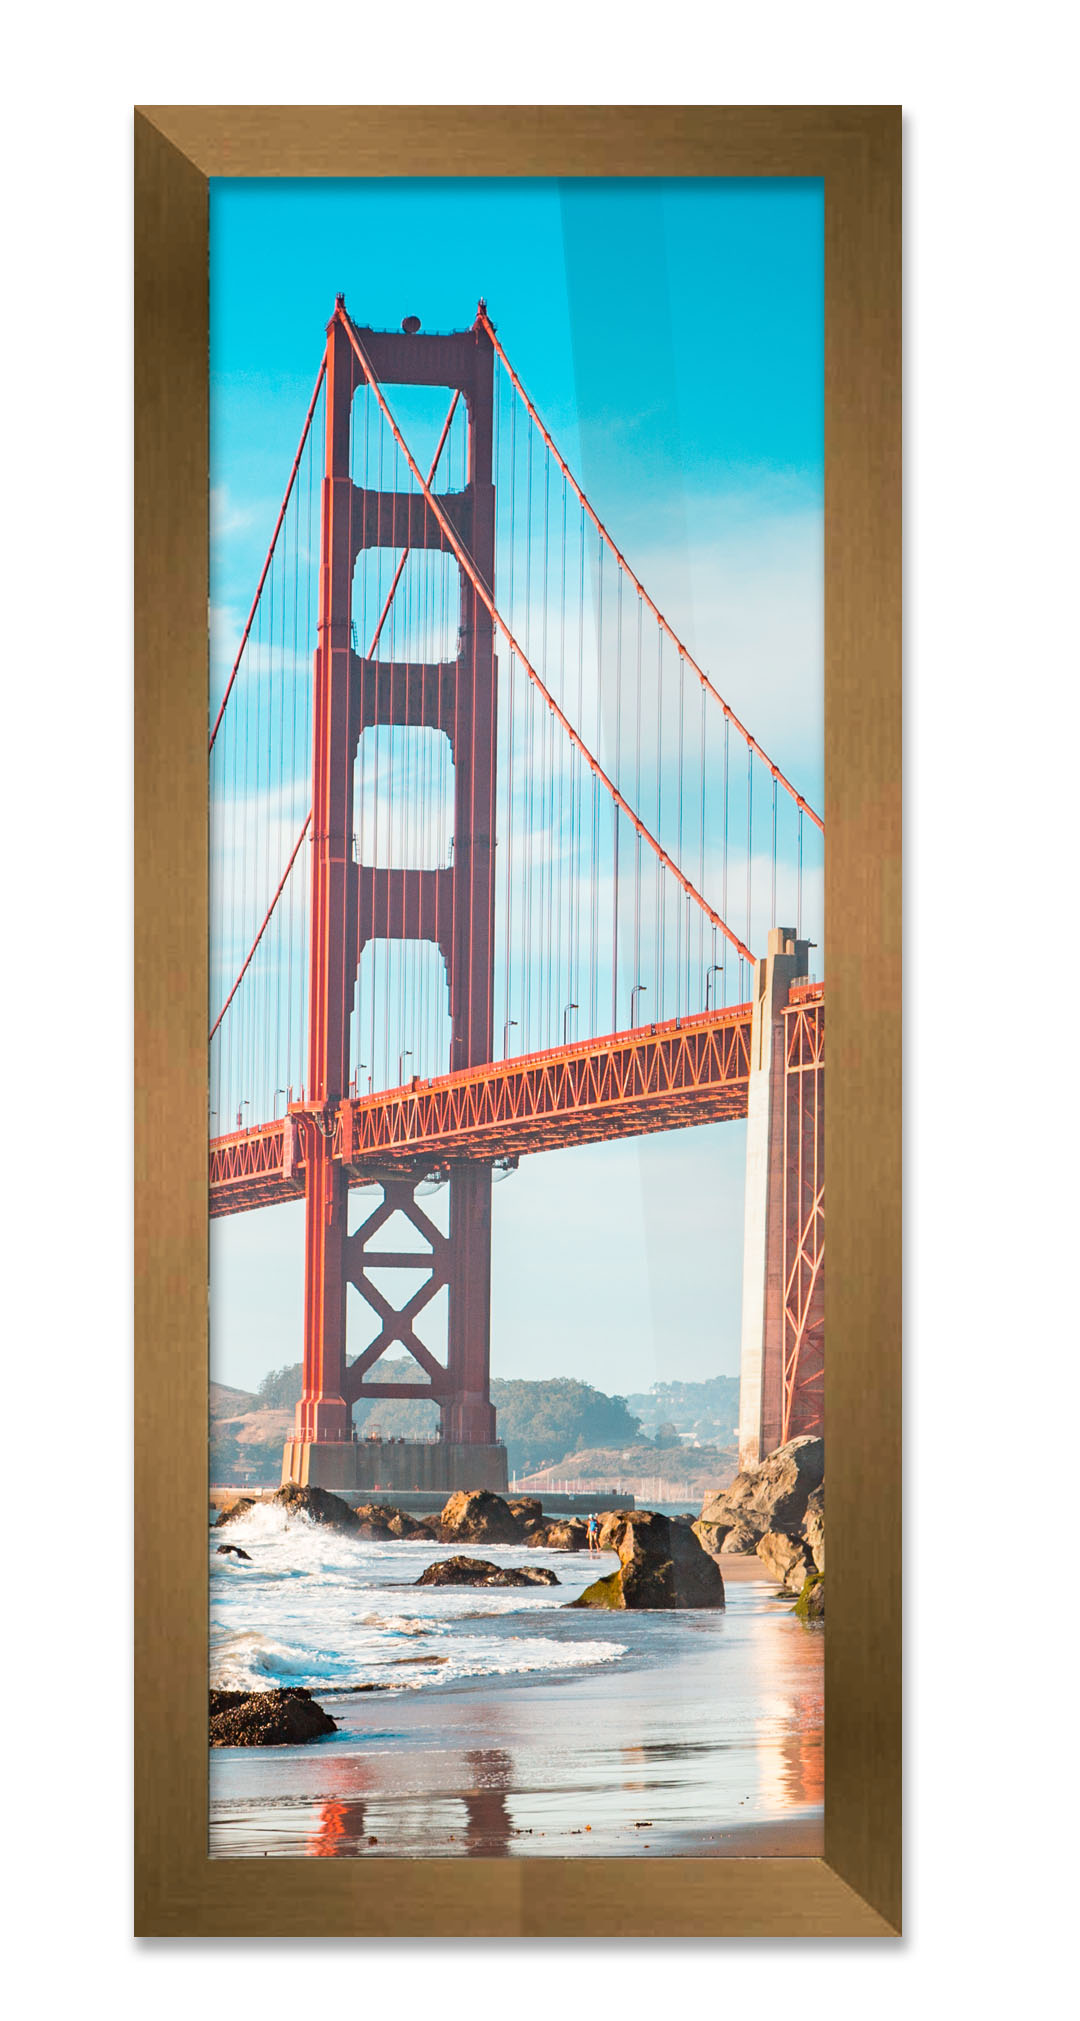 CustomPictureFrames.com 52x20 Frame Metallic Bronze Picture Frame - Modern Photo Frame Includes UV Acrylic Shatter Guard Front, Acid Free Foam Backing